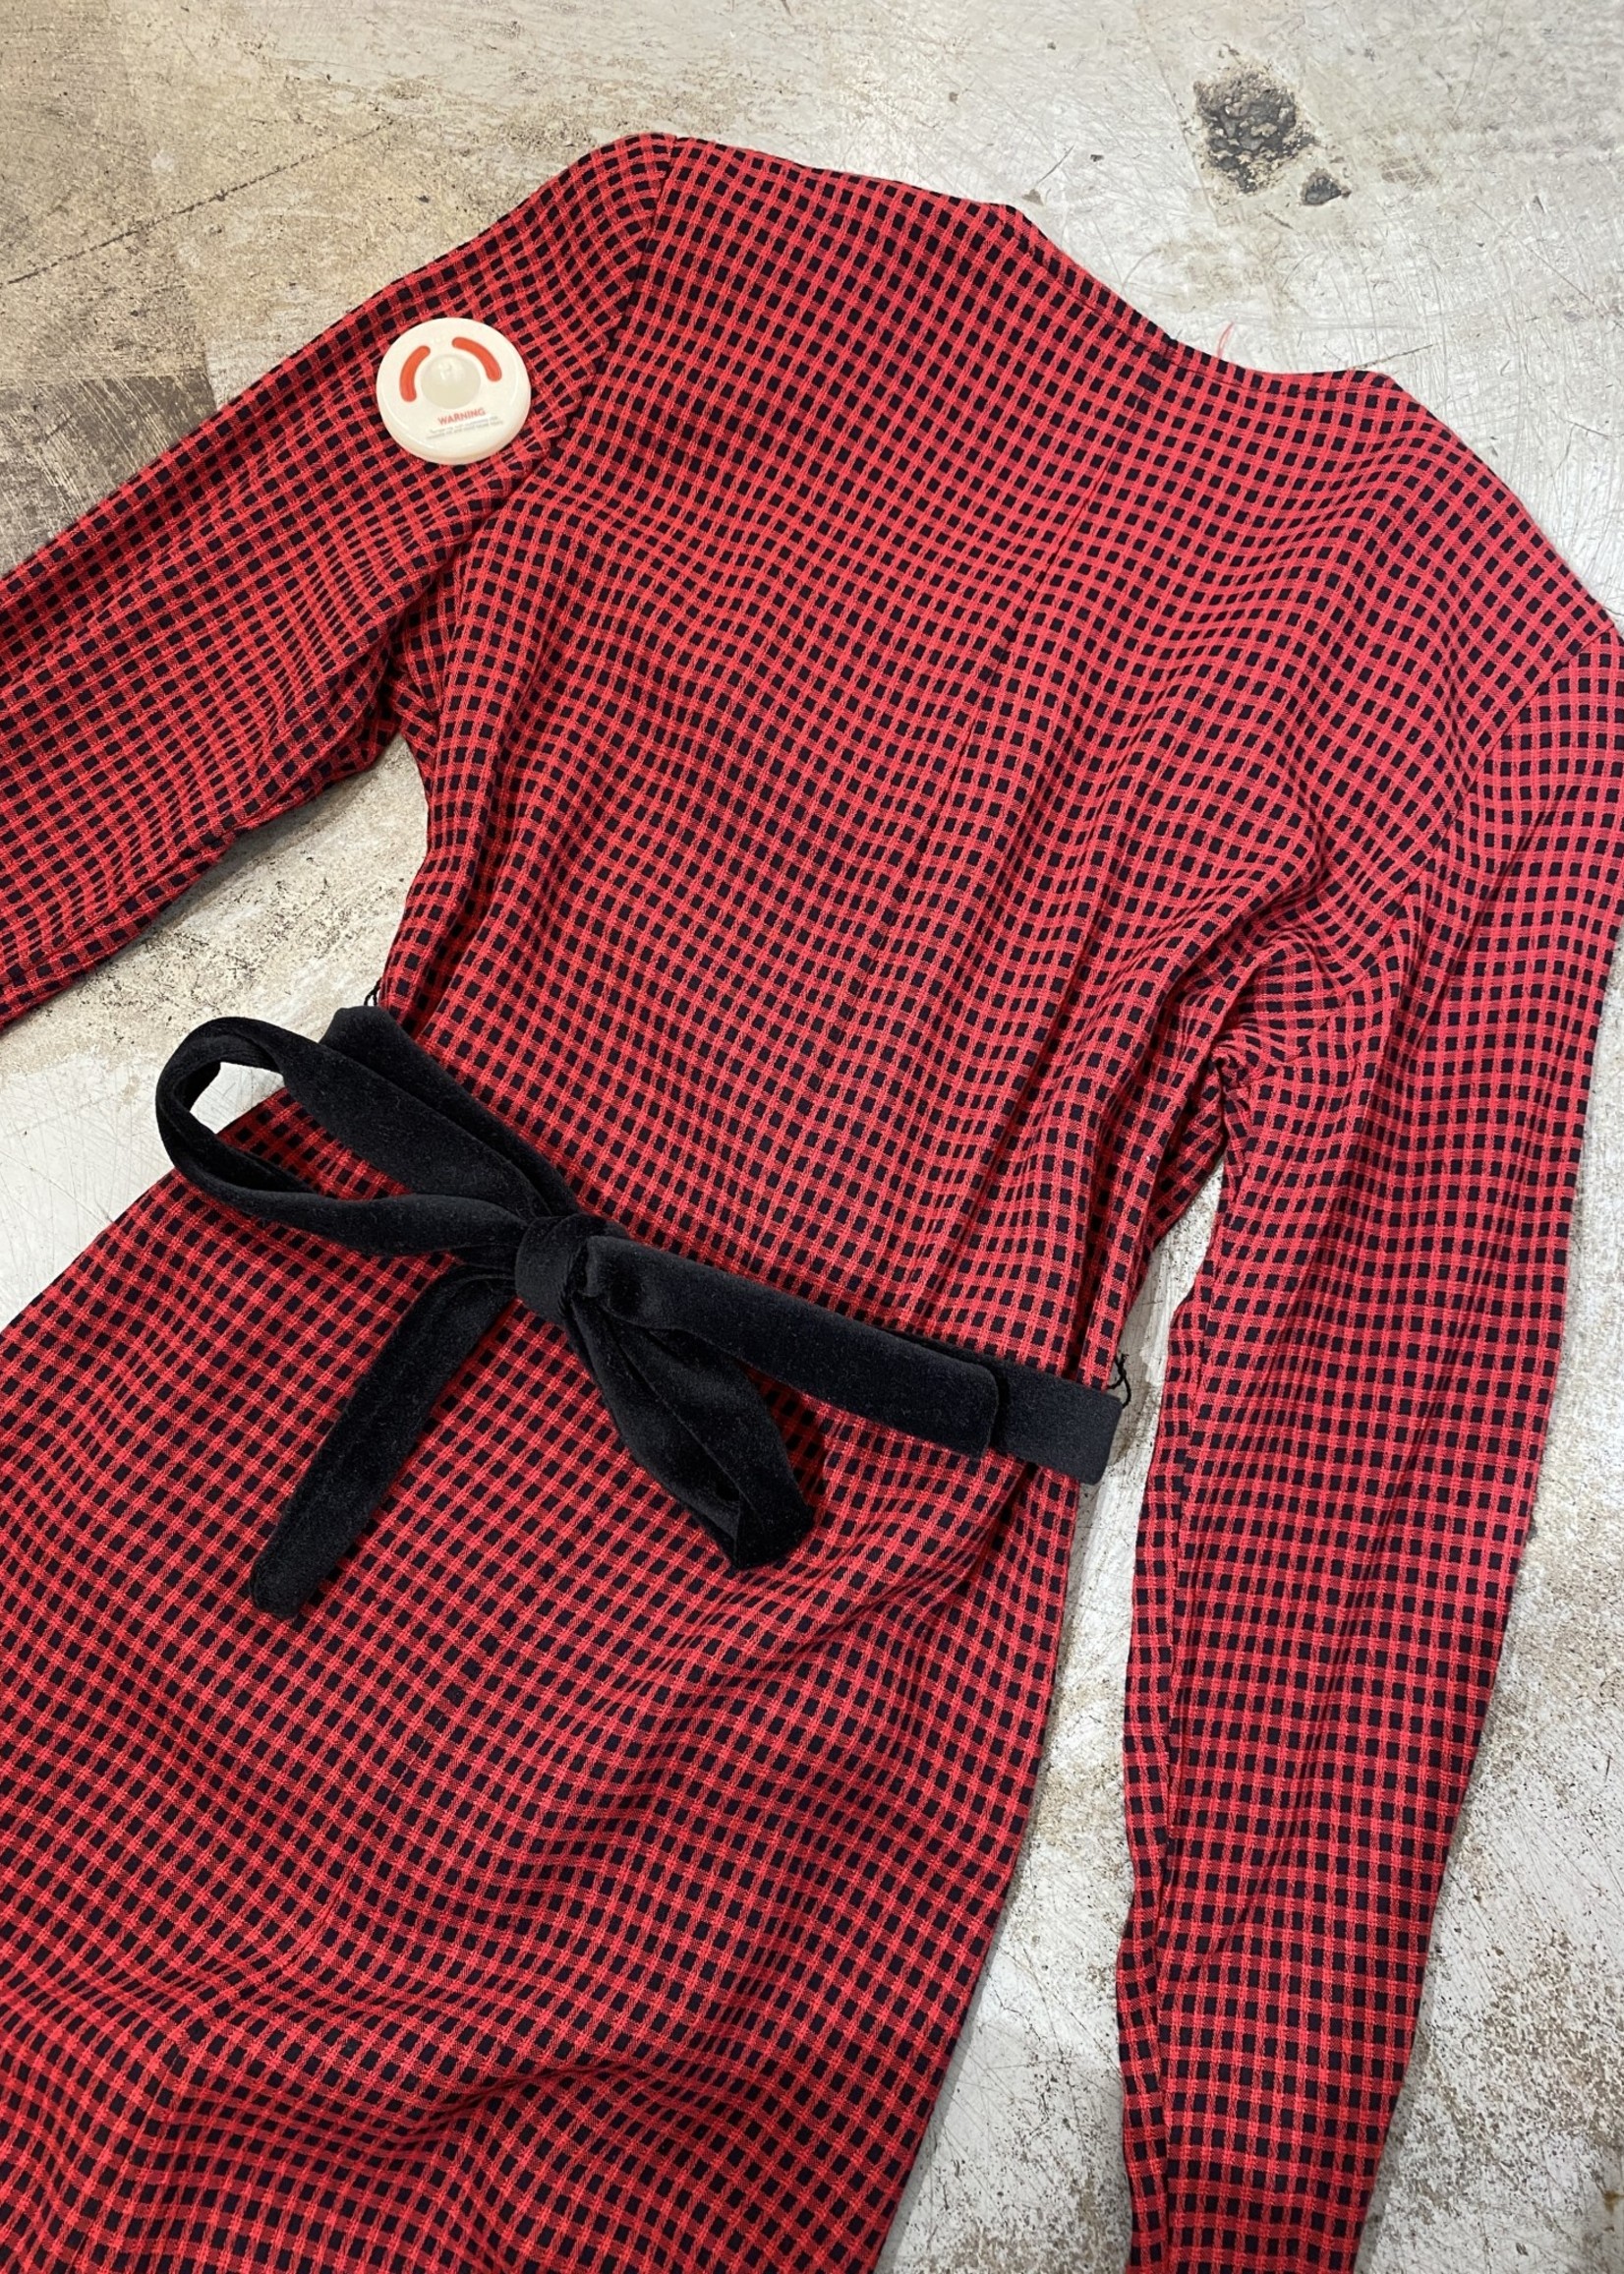 NWT Helene Blake '80s Red Checkered Dress 4/S